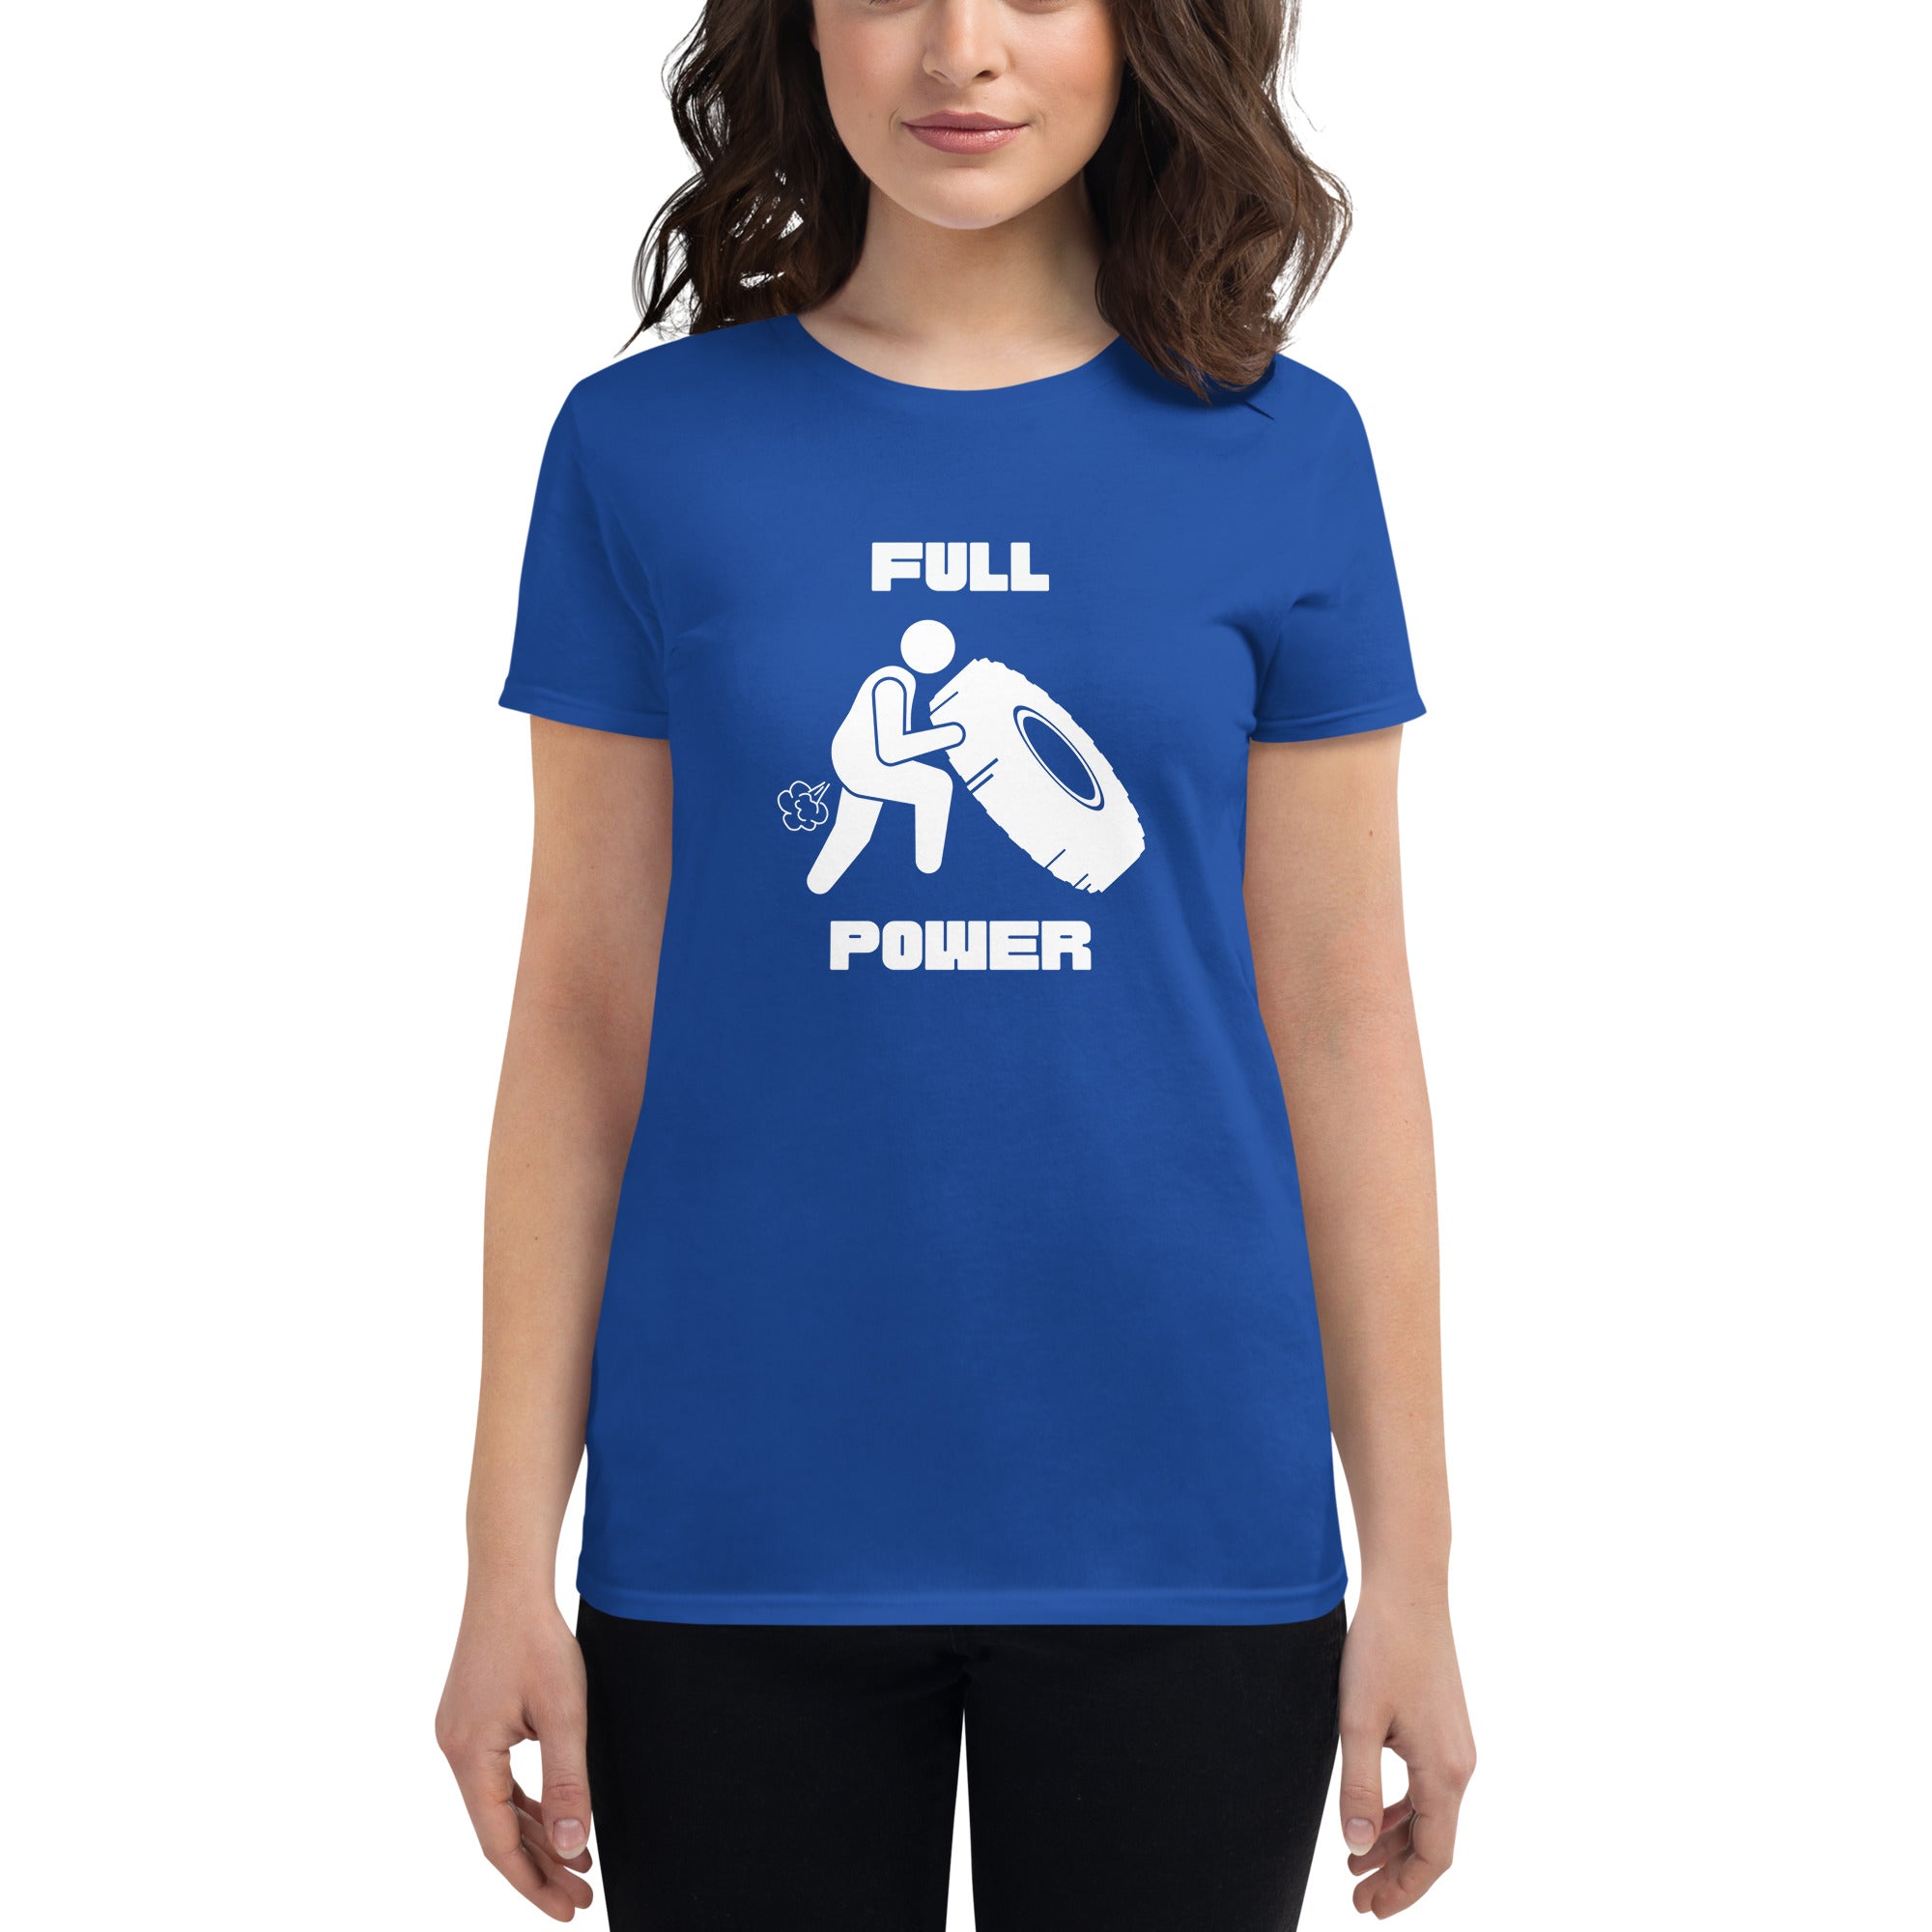 Full Power Women's Fitted T-Shirt